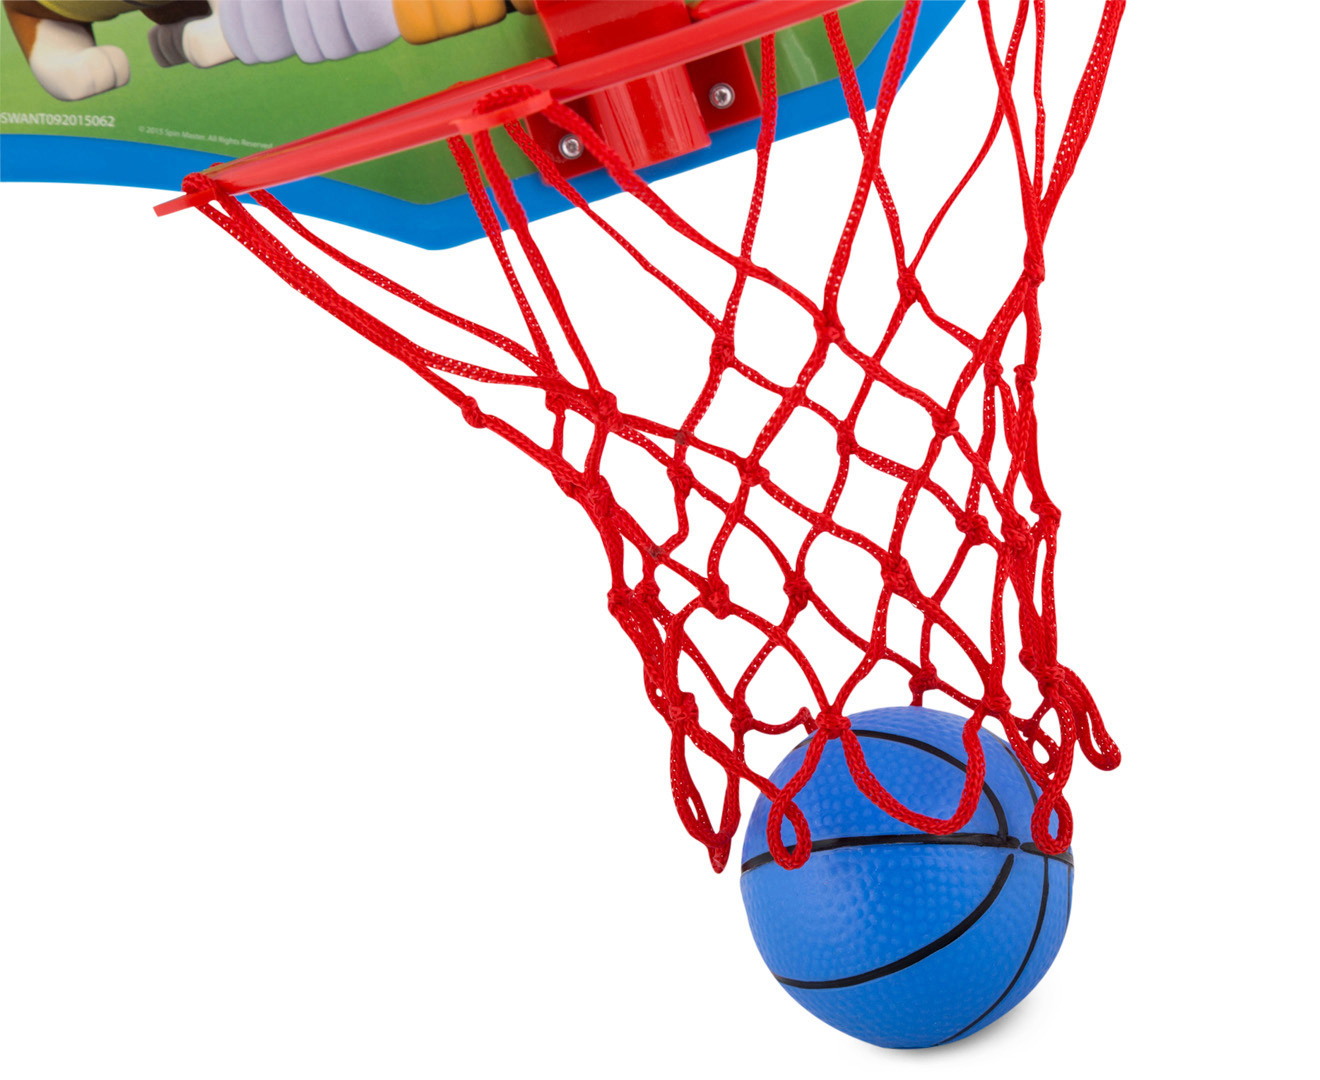 hoop shoot basketball game instructions